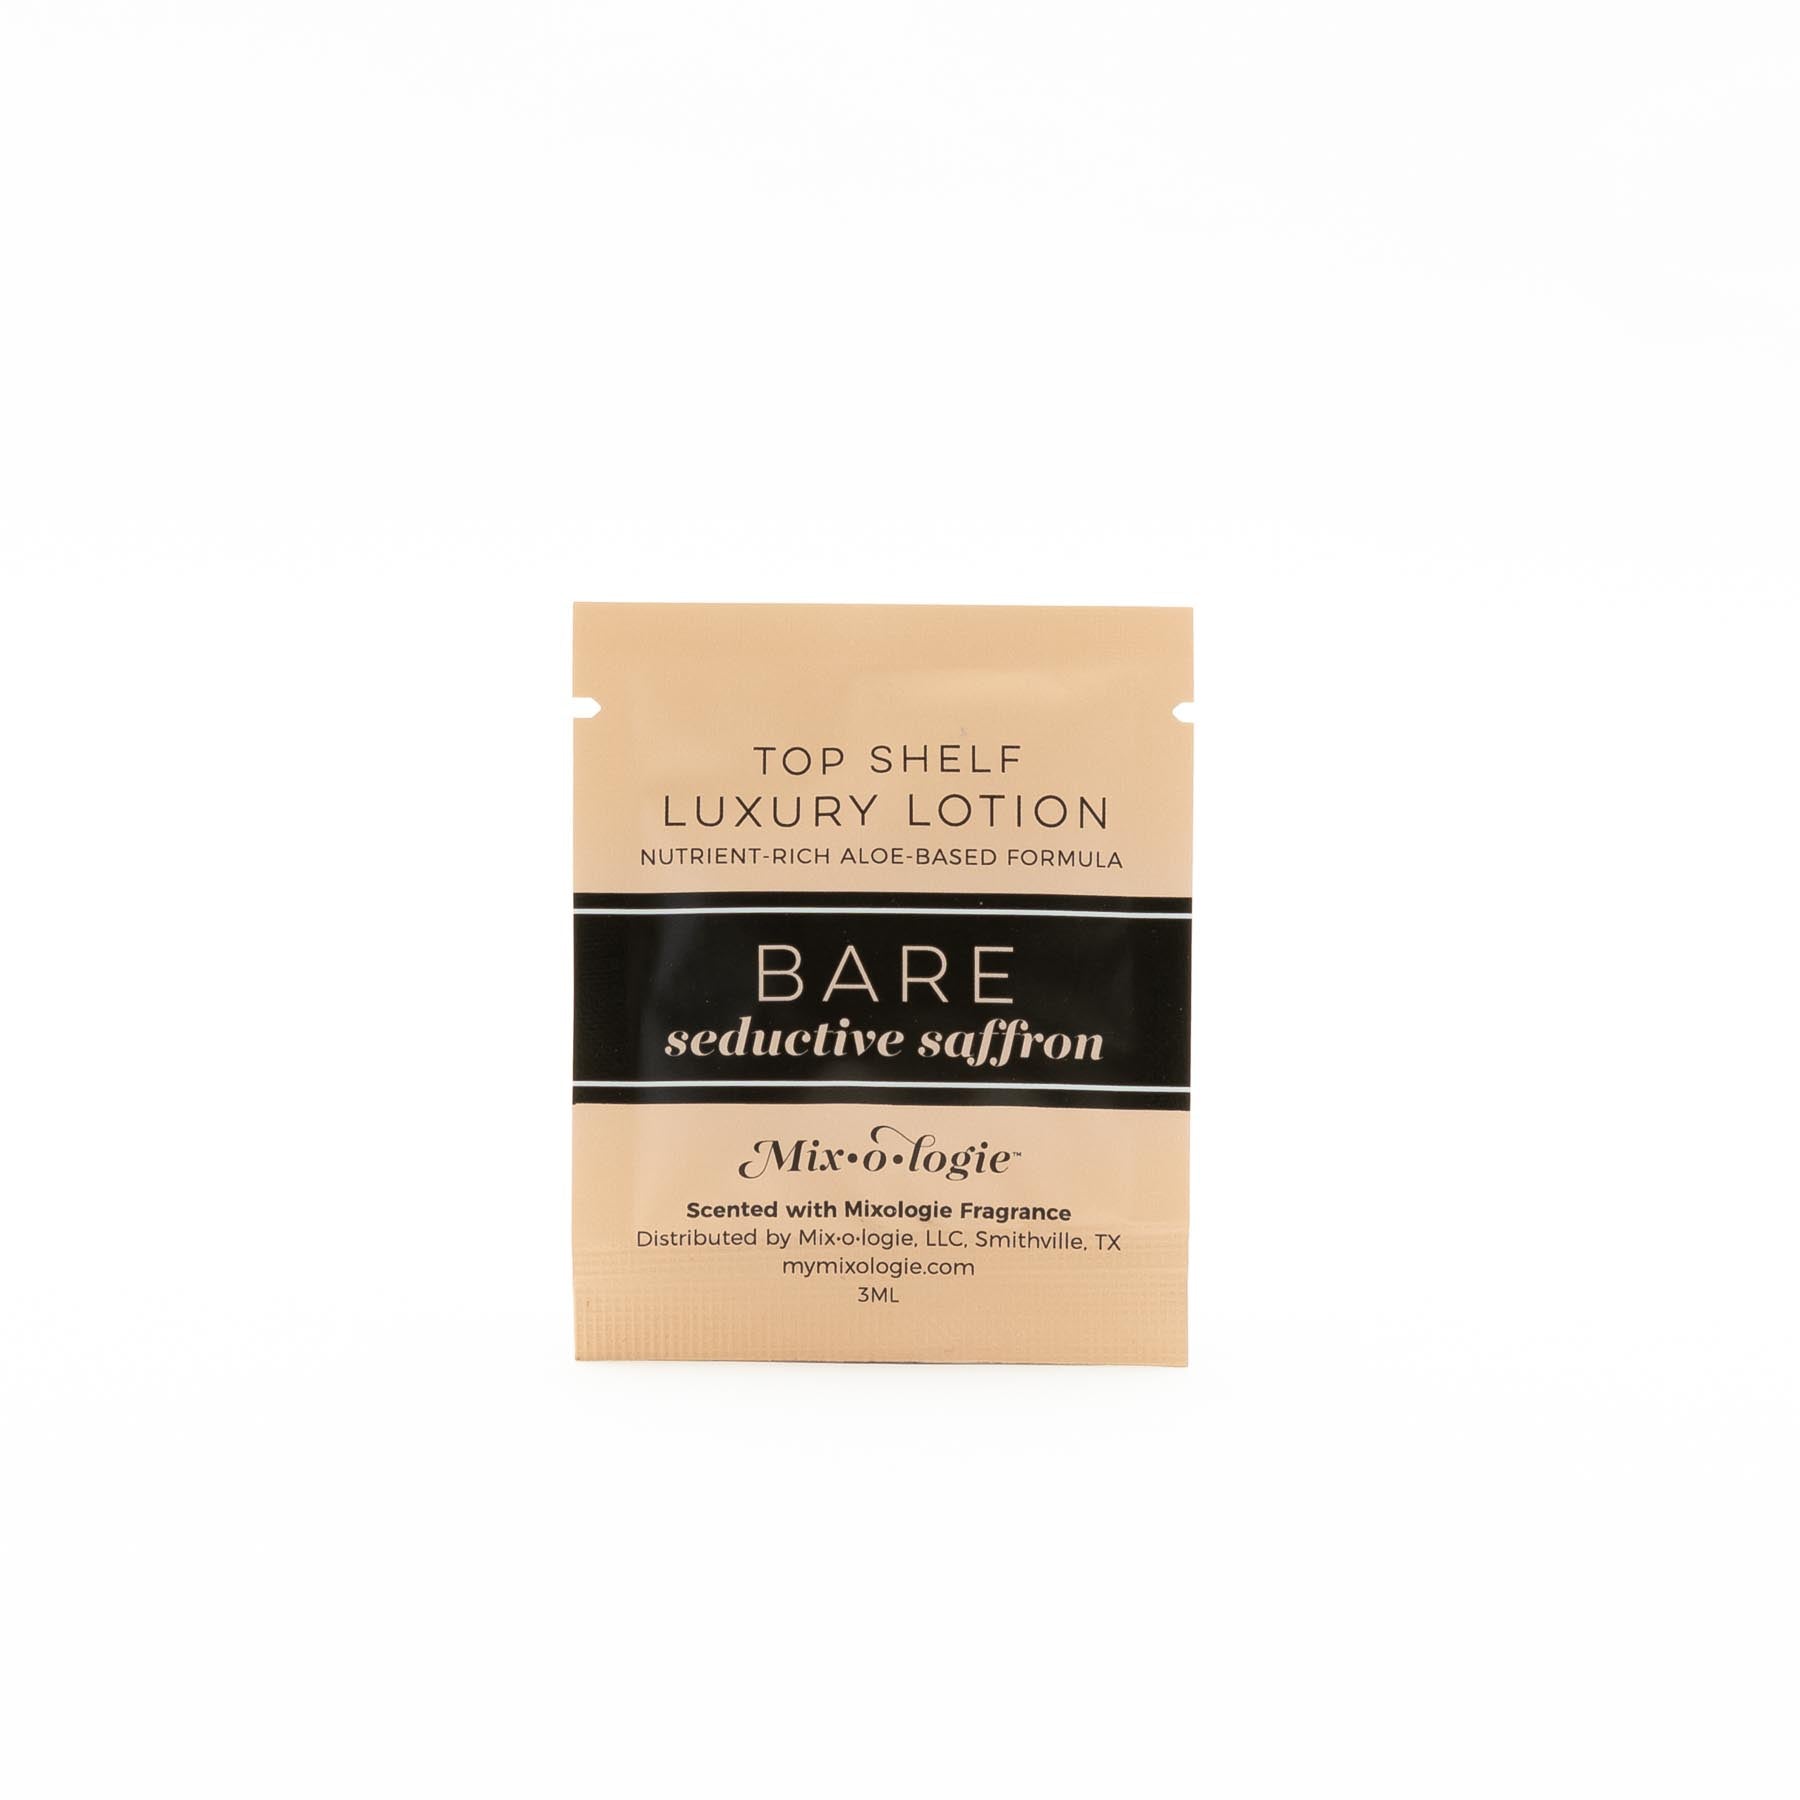 Bare (Seductive Saffron) - Top Shelf Luxury Lotion Sample